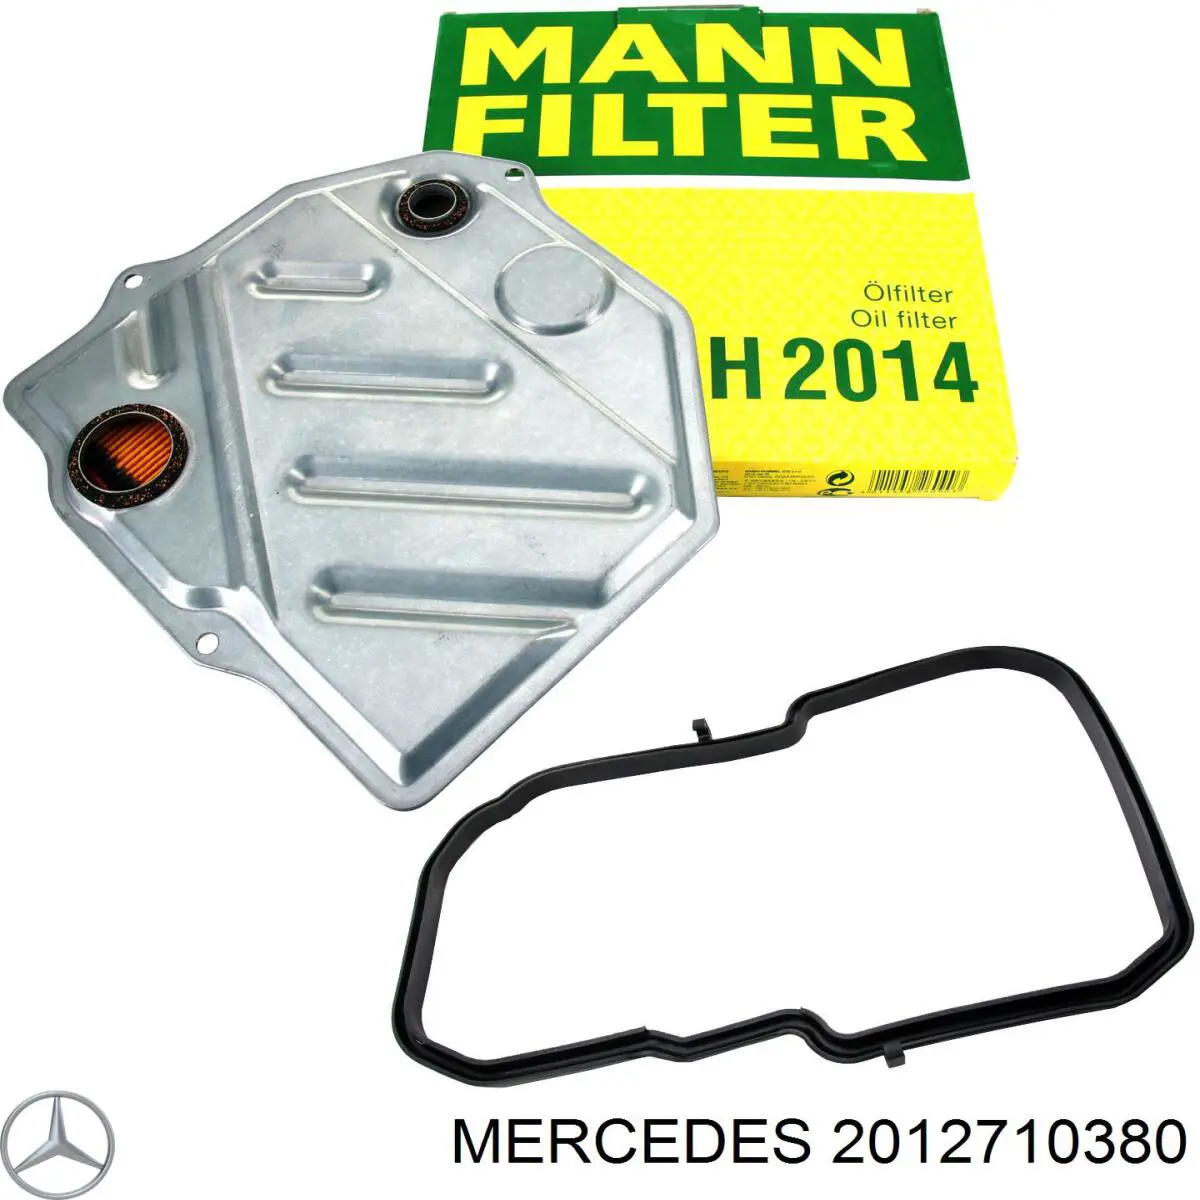 2012710380 Mercedes junta, cárter de aceite, caja de cambios